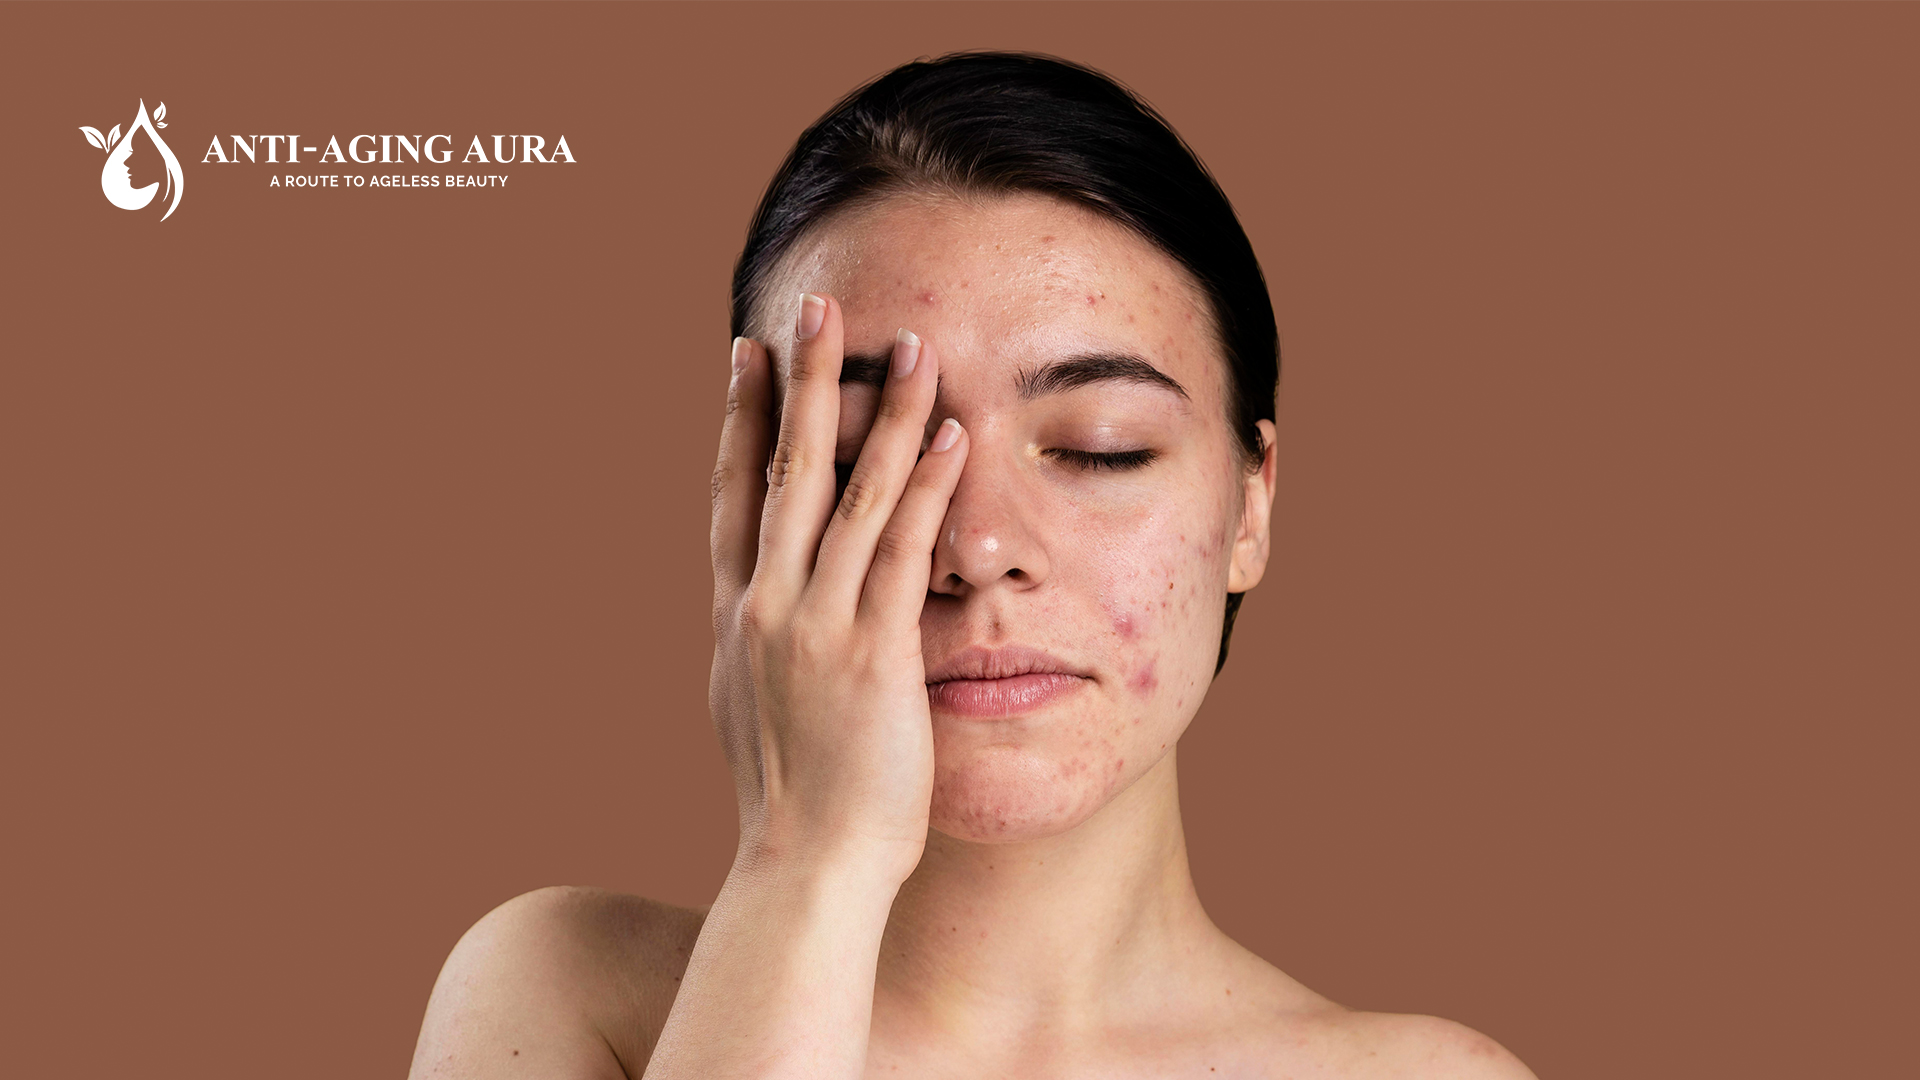 Can retinol cause acne?